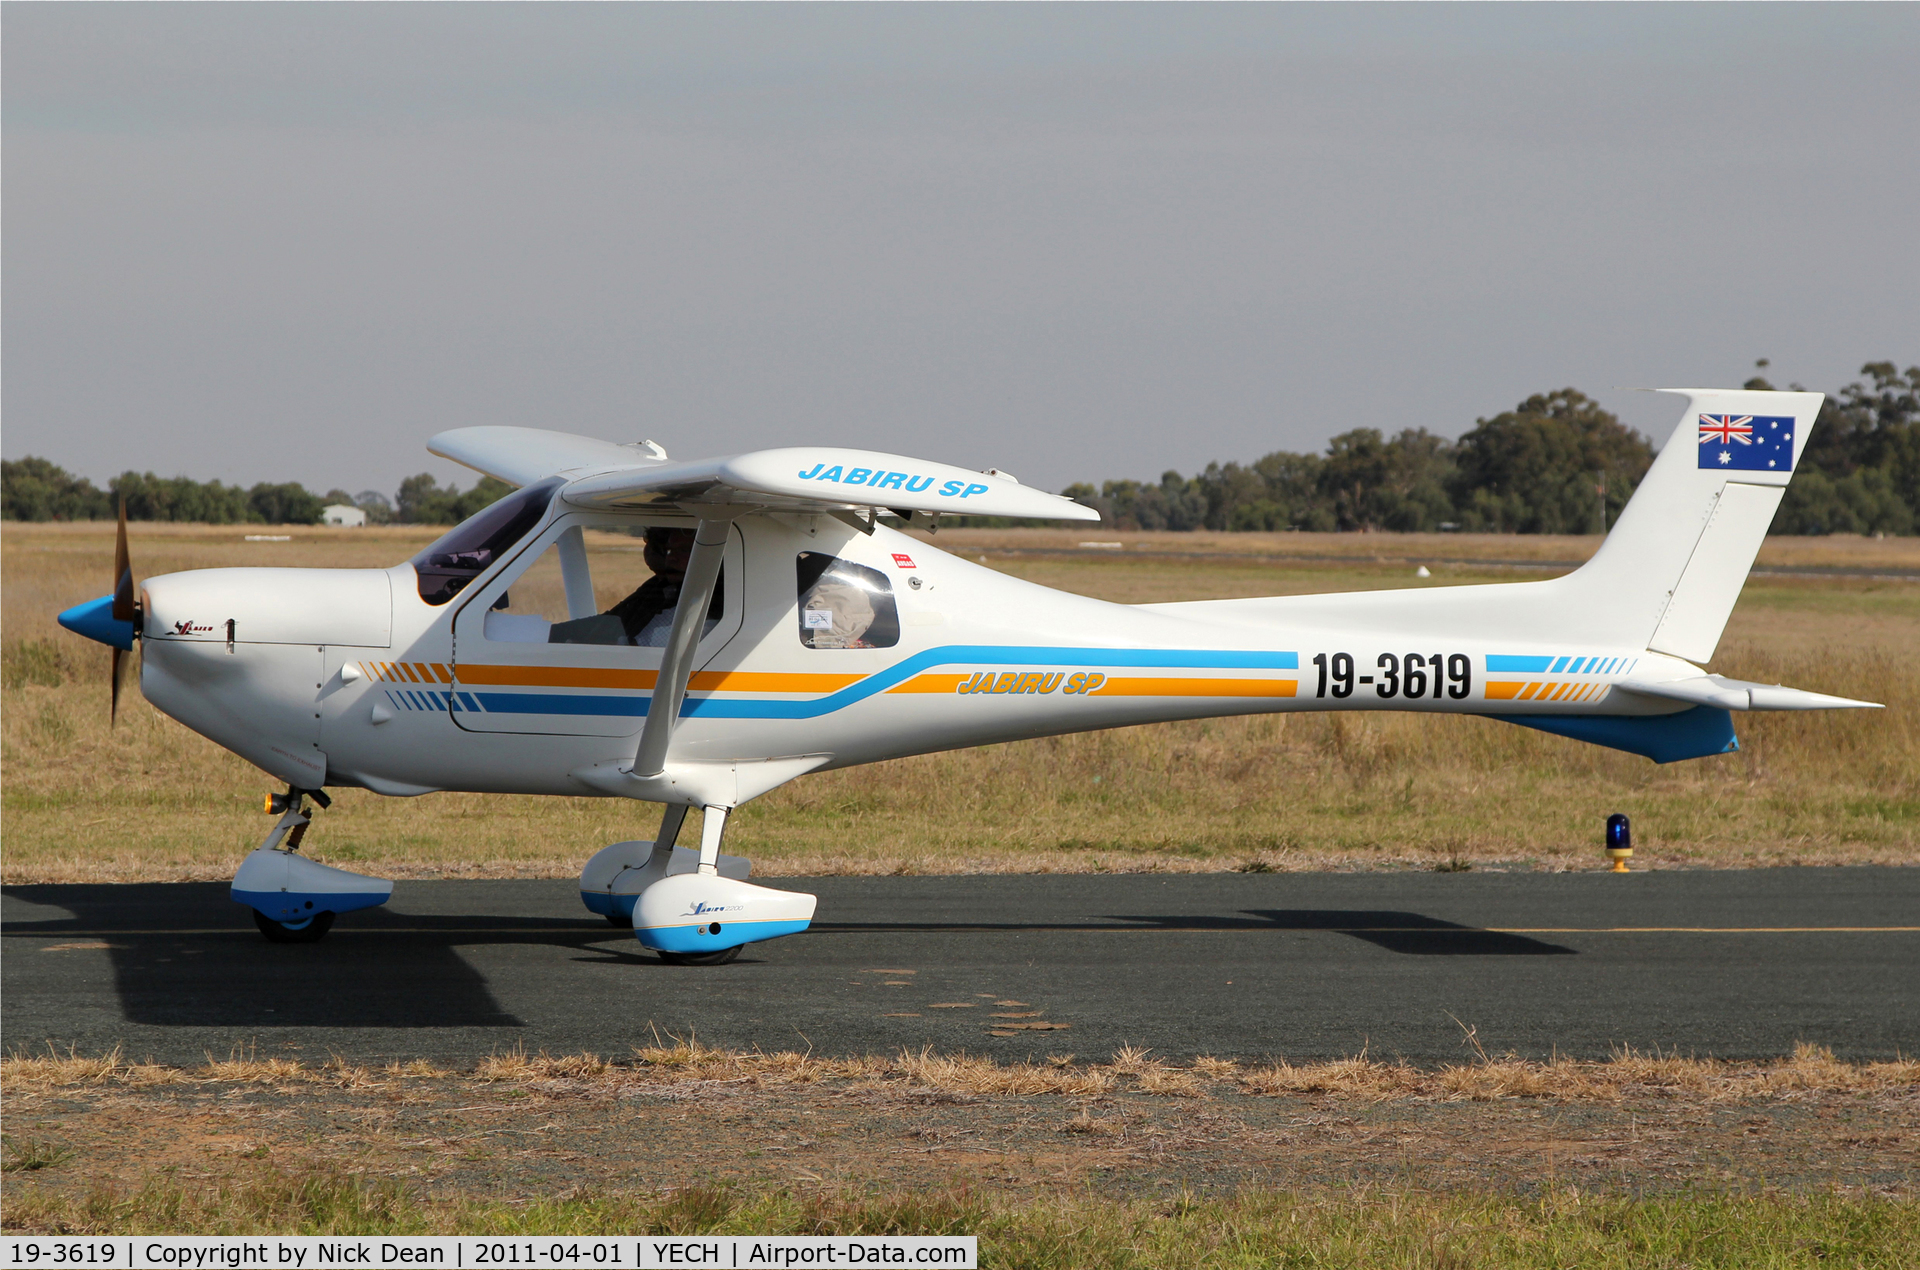 19-3619, Jabiru SP C/N N502, YECH AAAA National fly in 2011